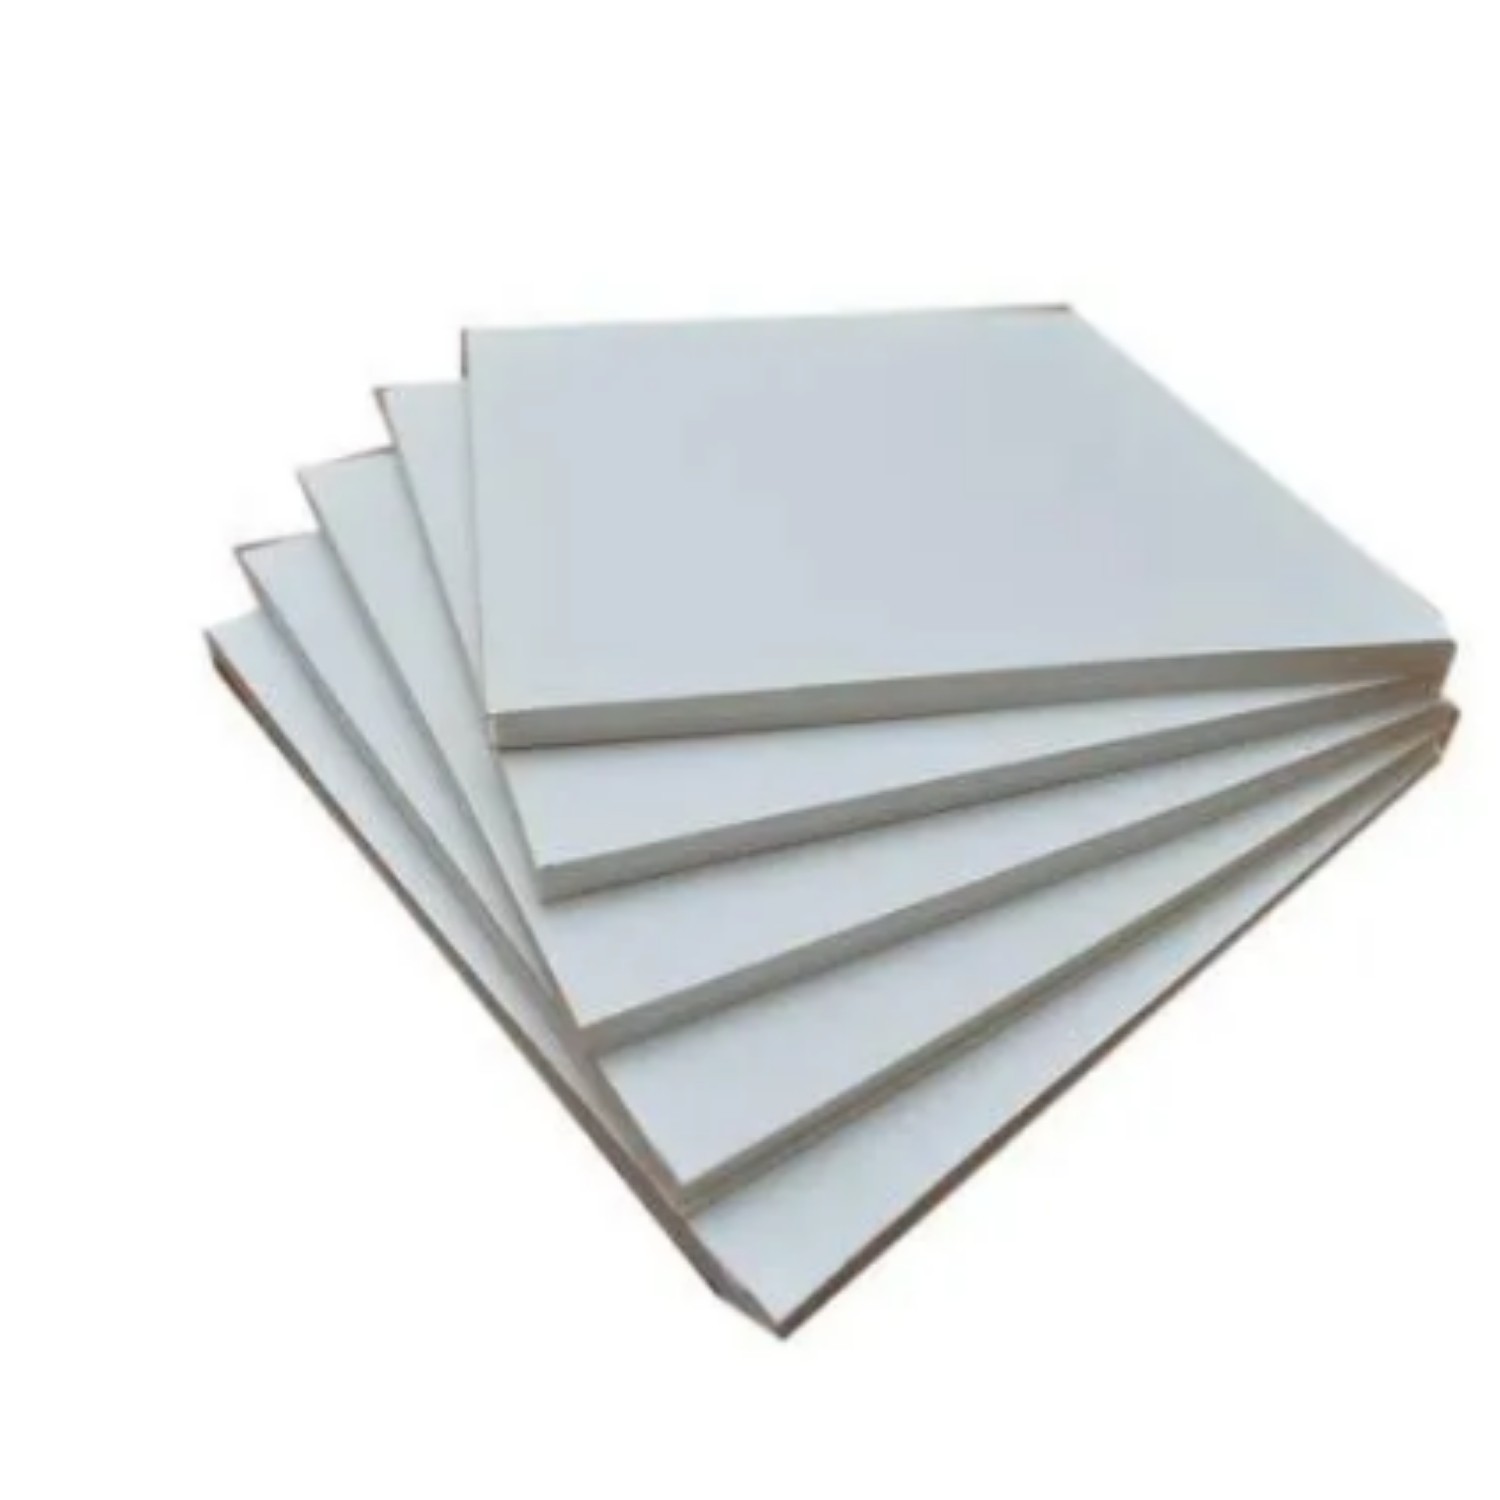 Wholesale Bulk 50mm styrofoam sheet Supplier At Low Prices